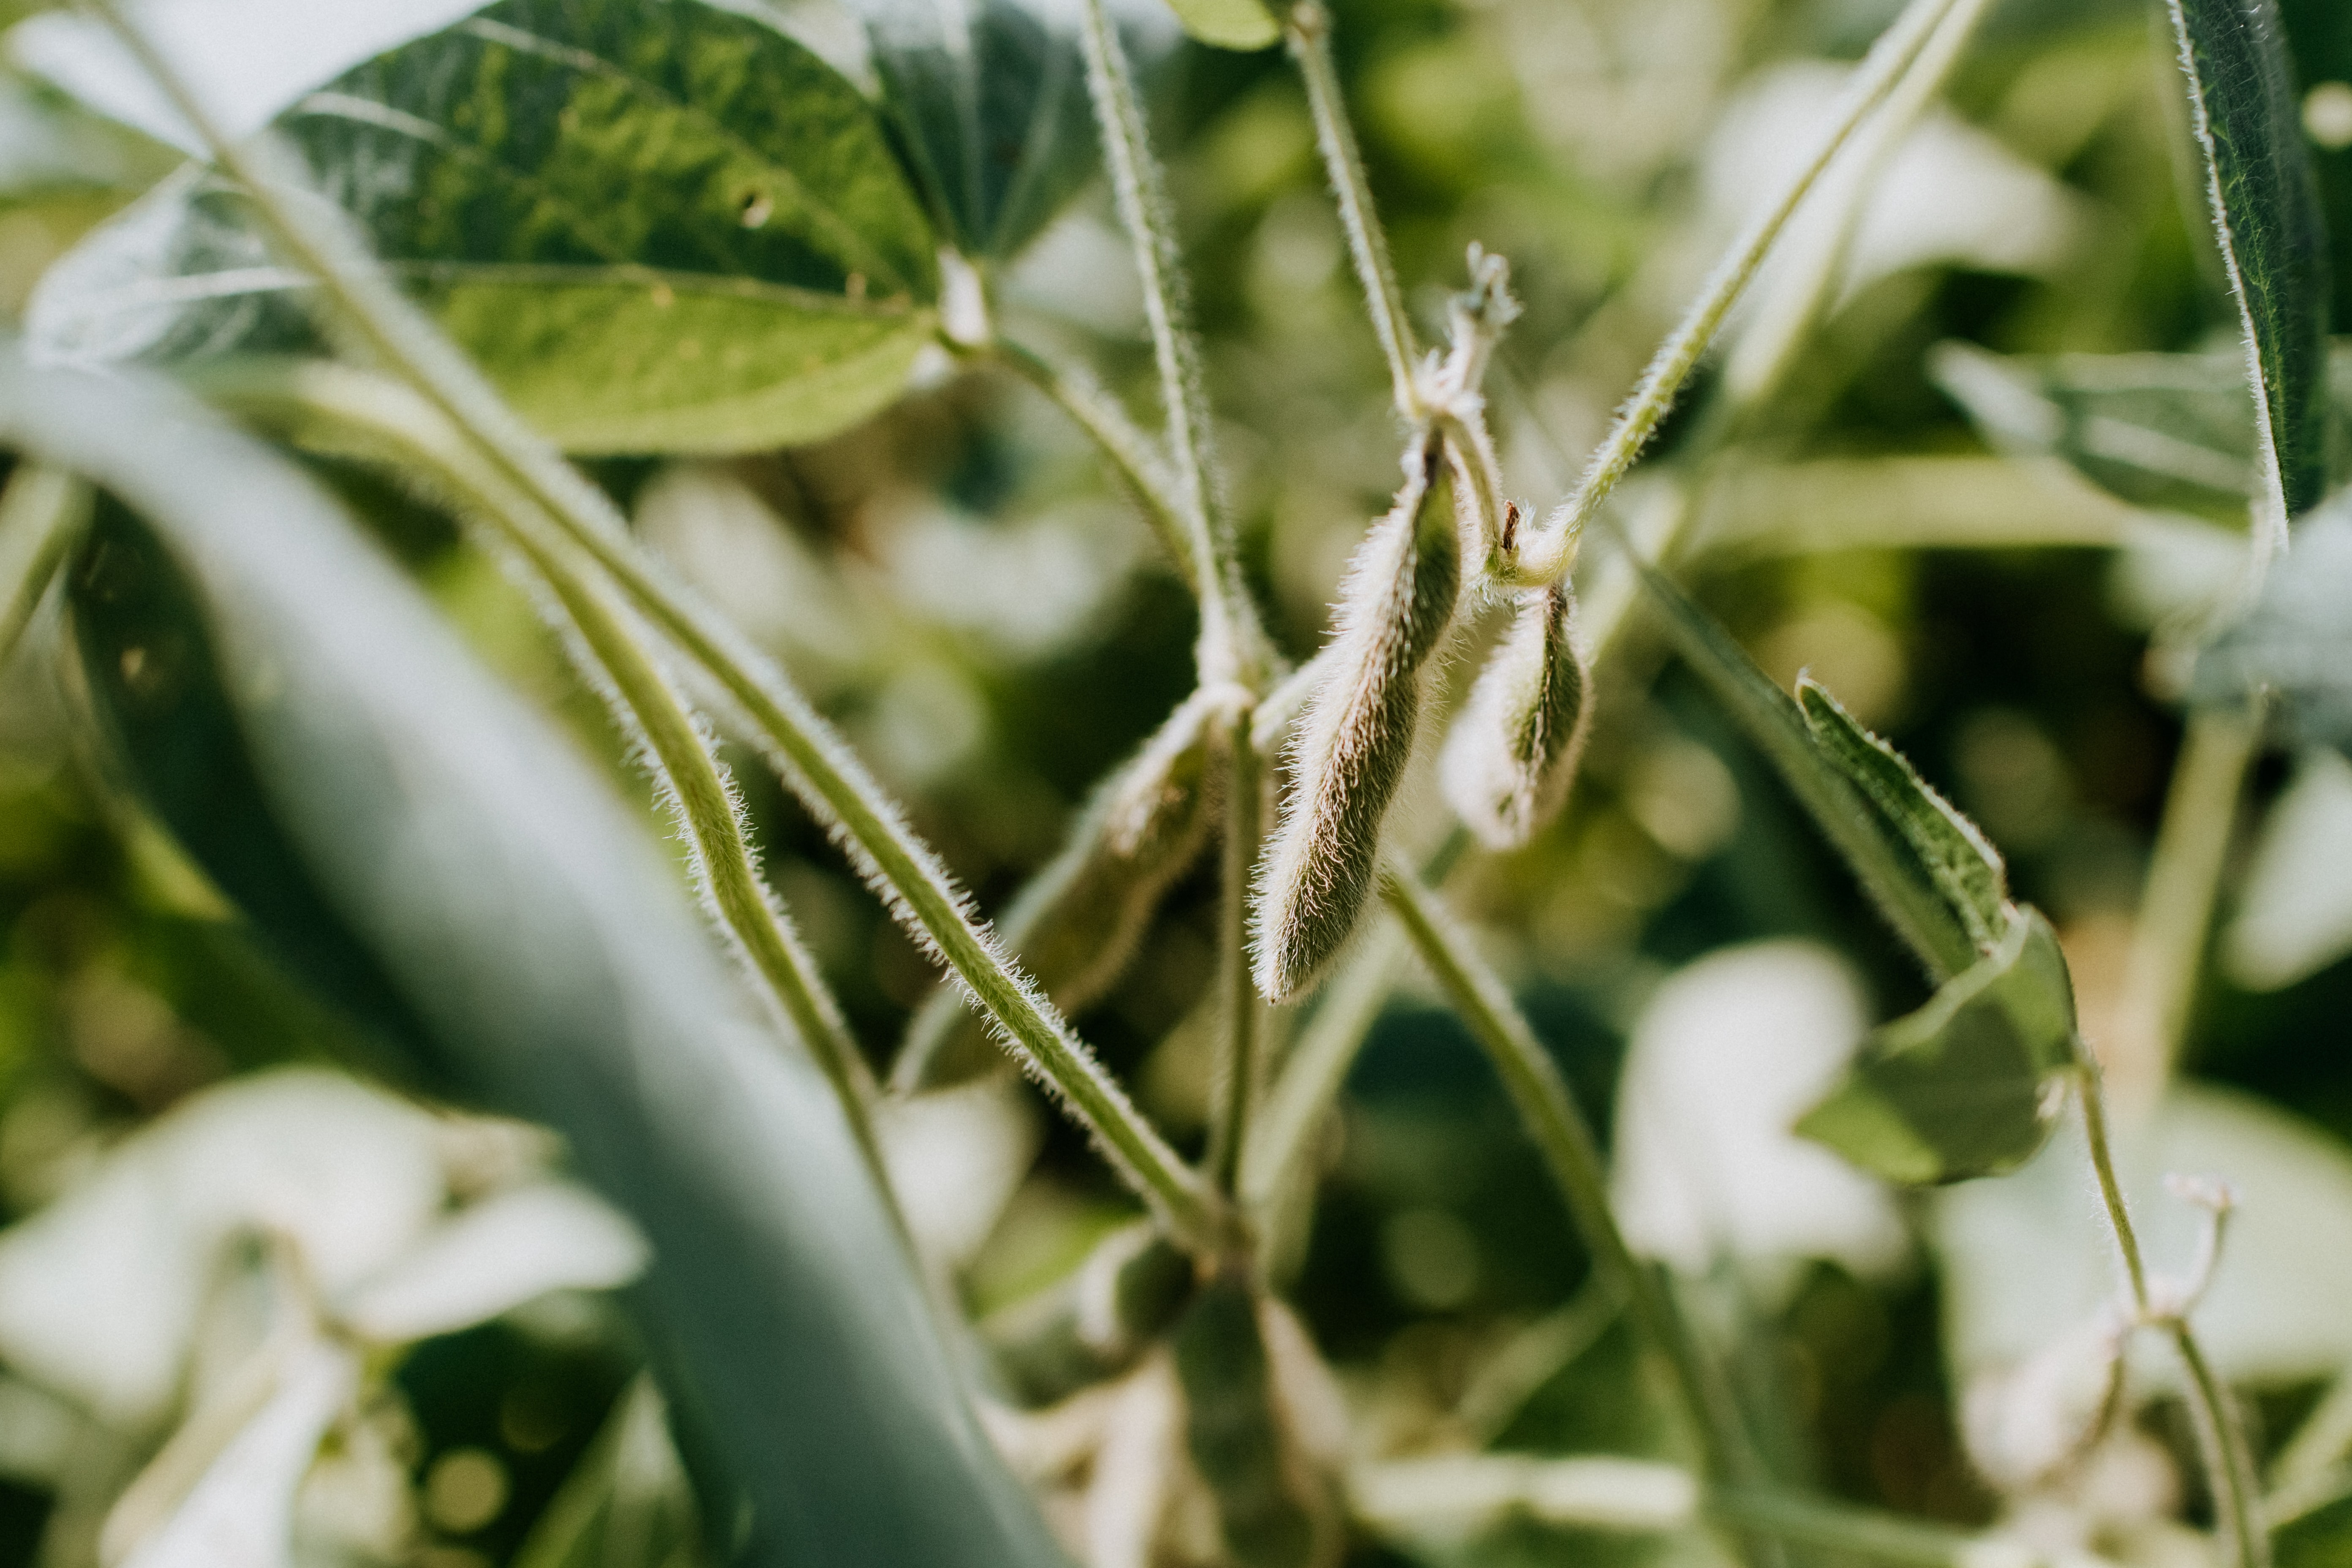 soybean on a stalk